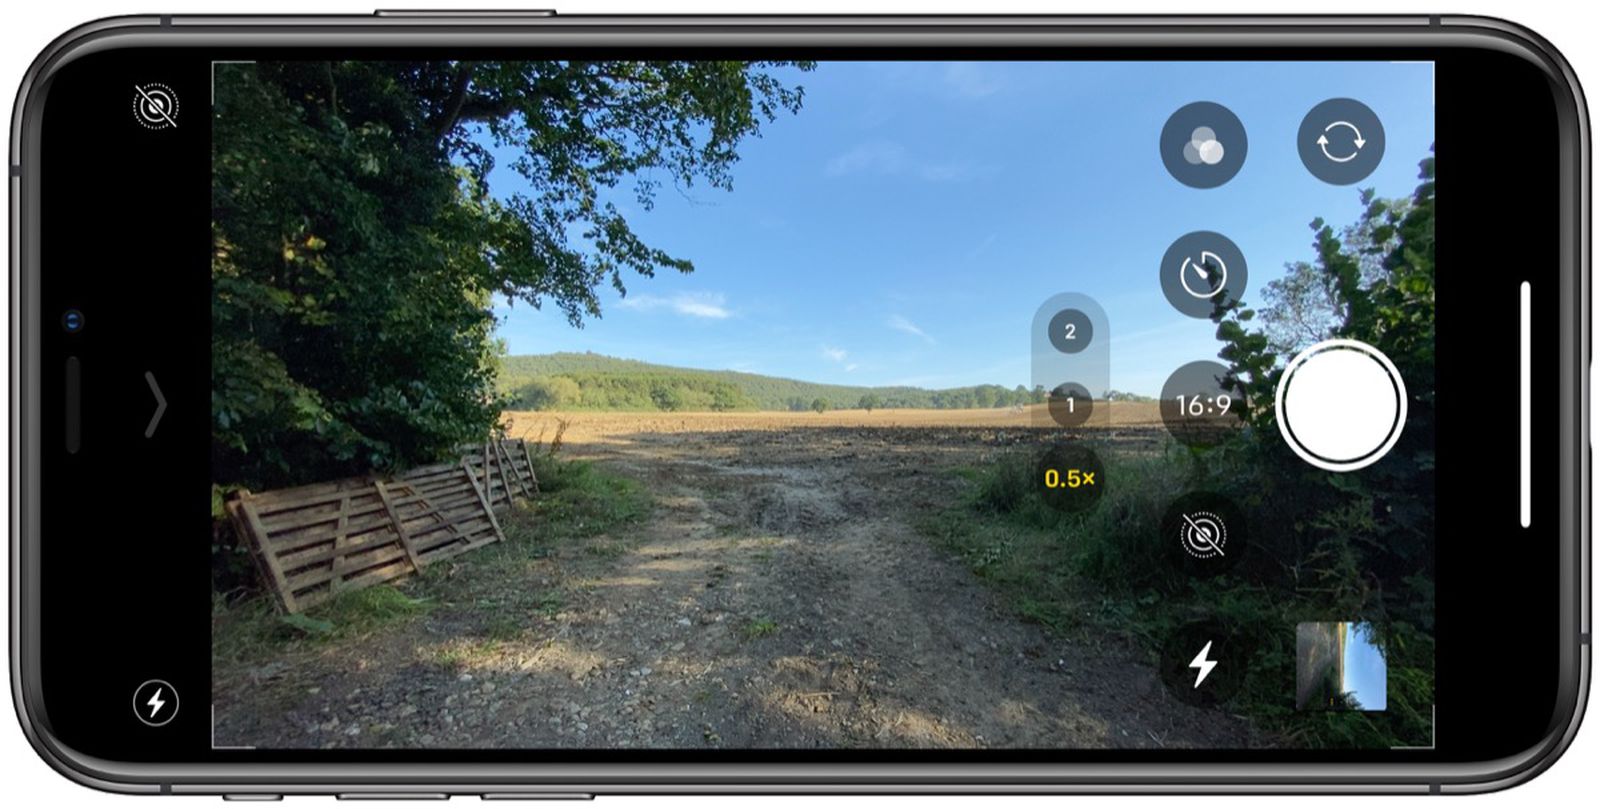 lenen Mellow Doorzichtig How to Select Camera Aspect Ratio on iPhone 11 and iPhone 11 Pro - MacRumors